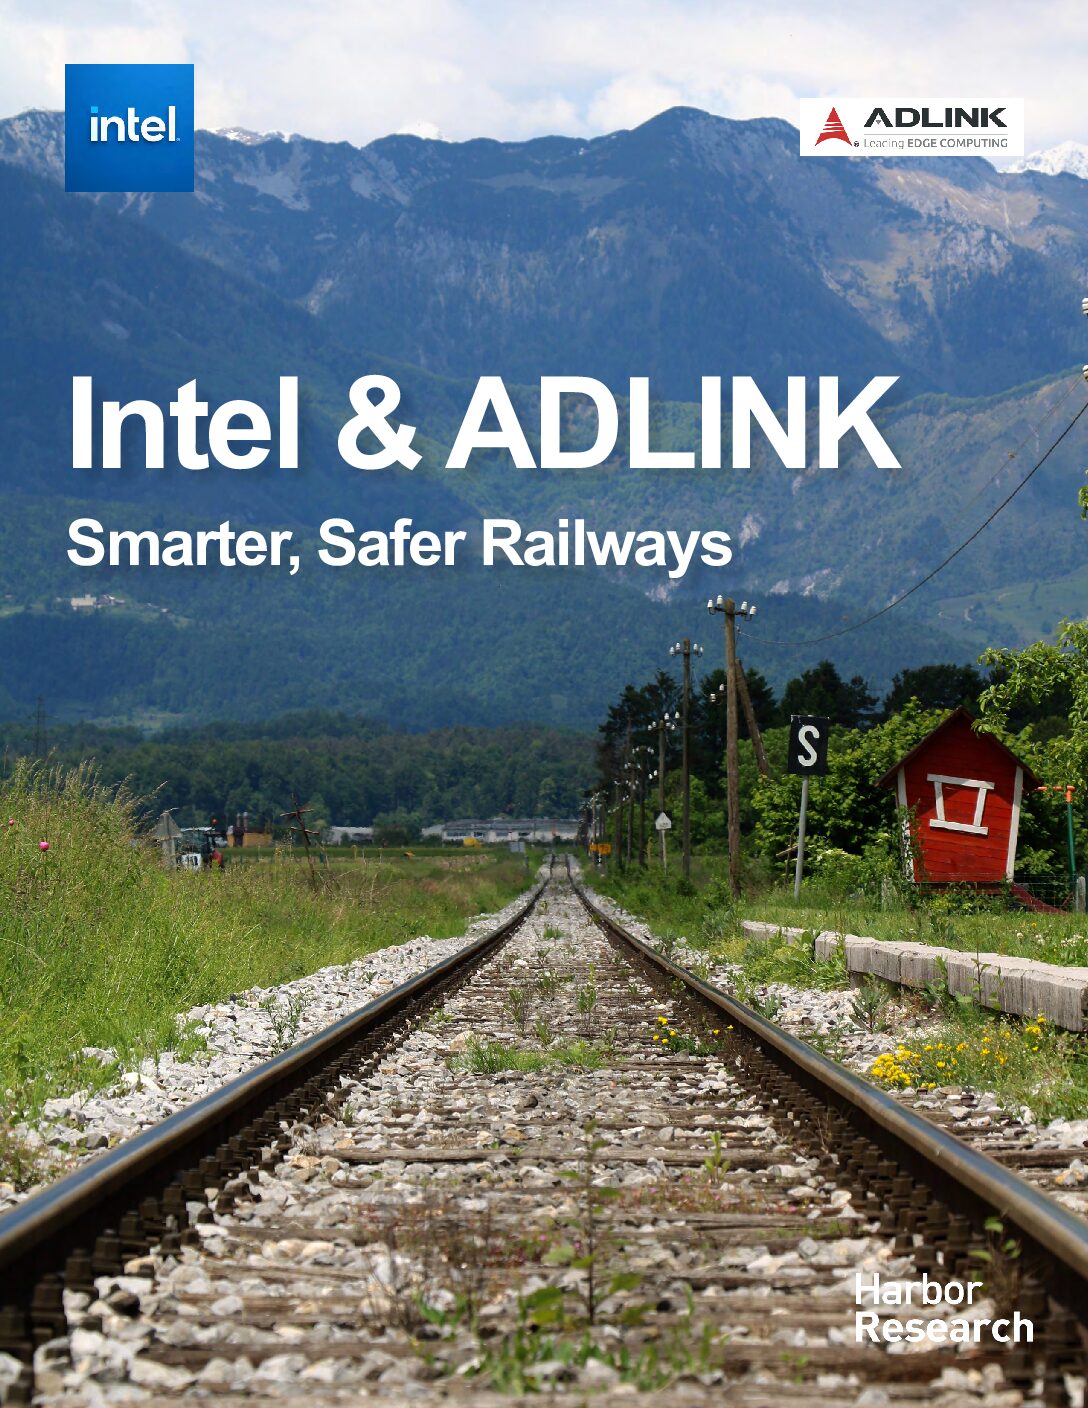 Intel & ADLINK – Smarter, Safer Railways